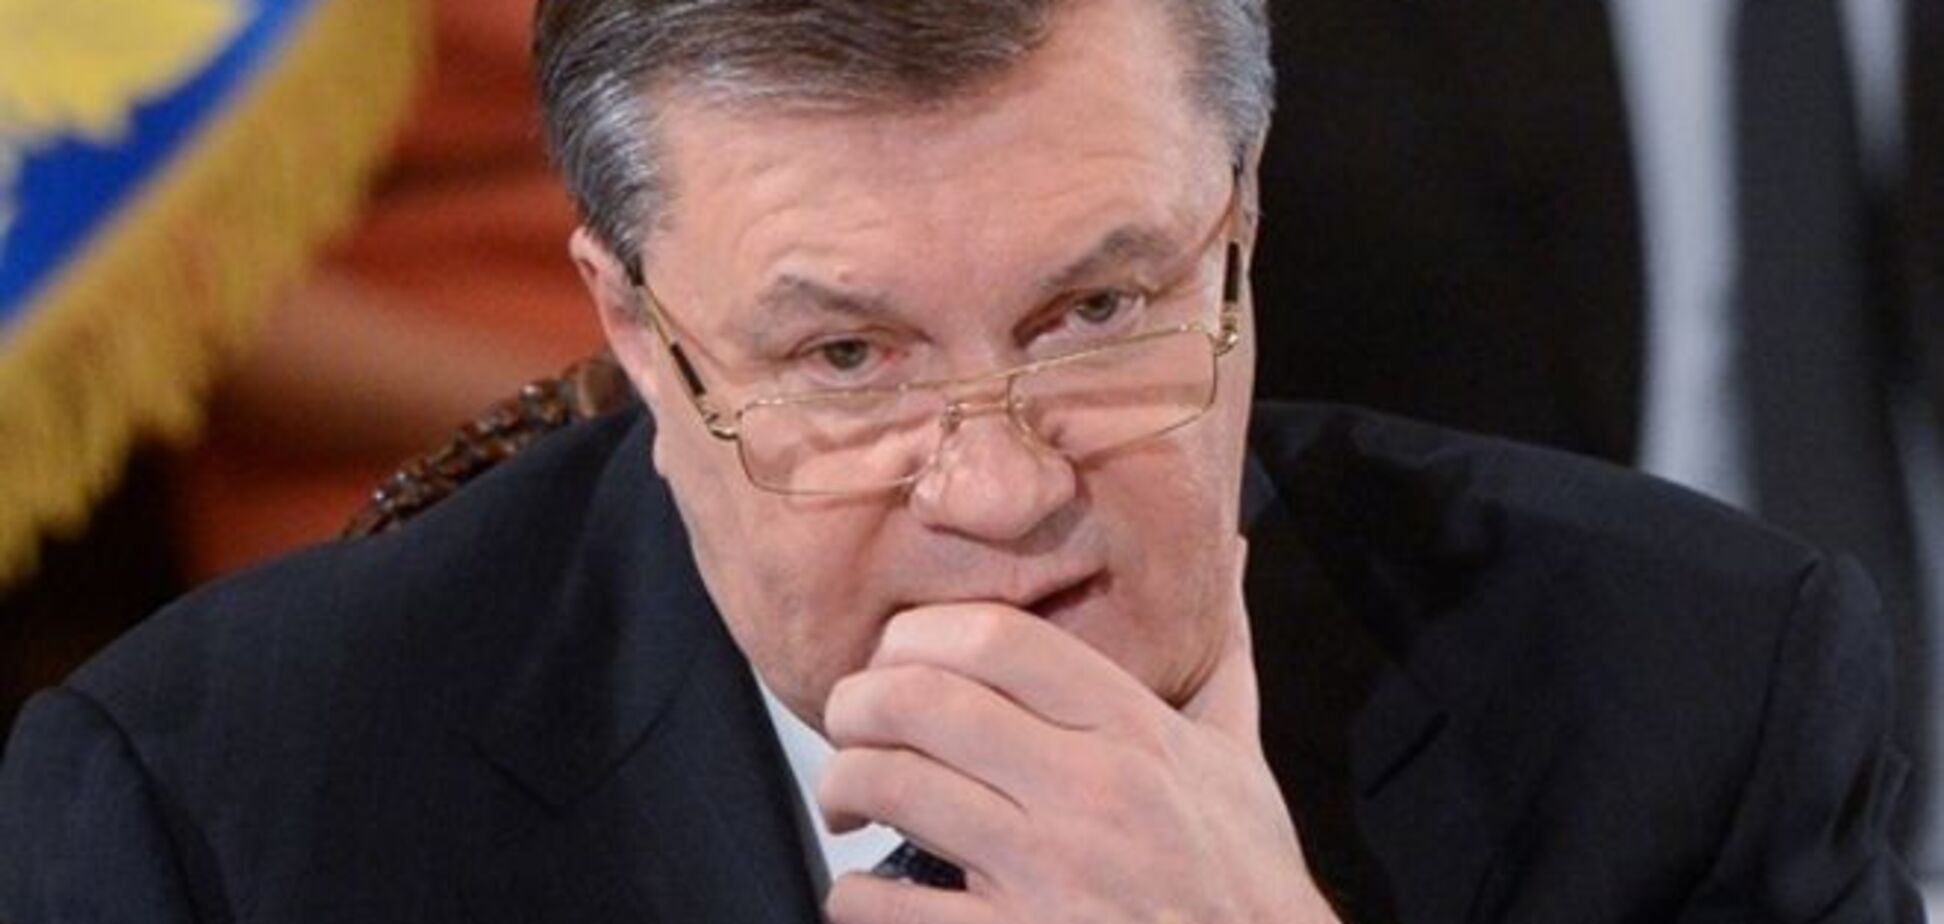 В Вильнюсе перед Майданом Януковичу обещали миллиарды – Квасьневский